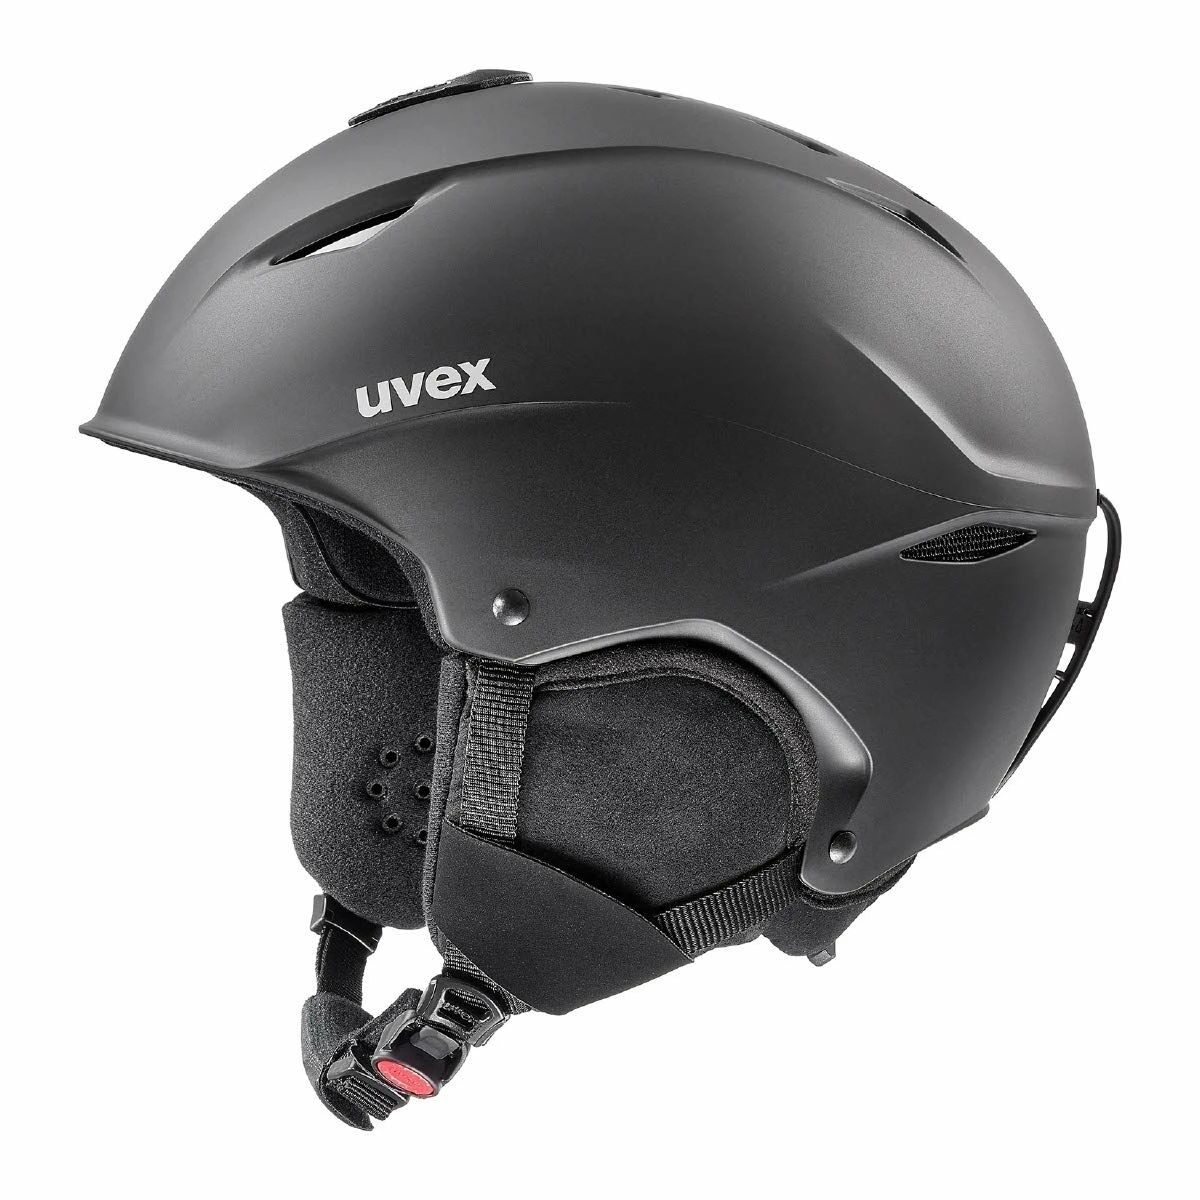 Matte black ski helmet, uvex brand.